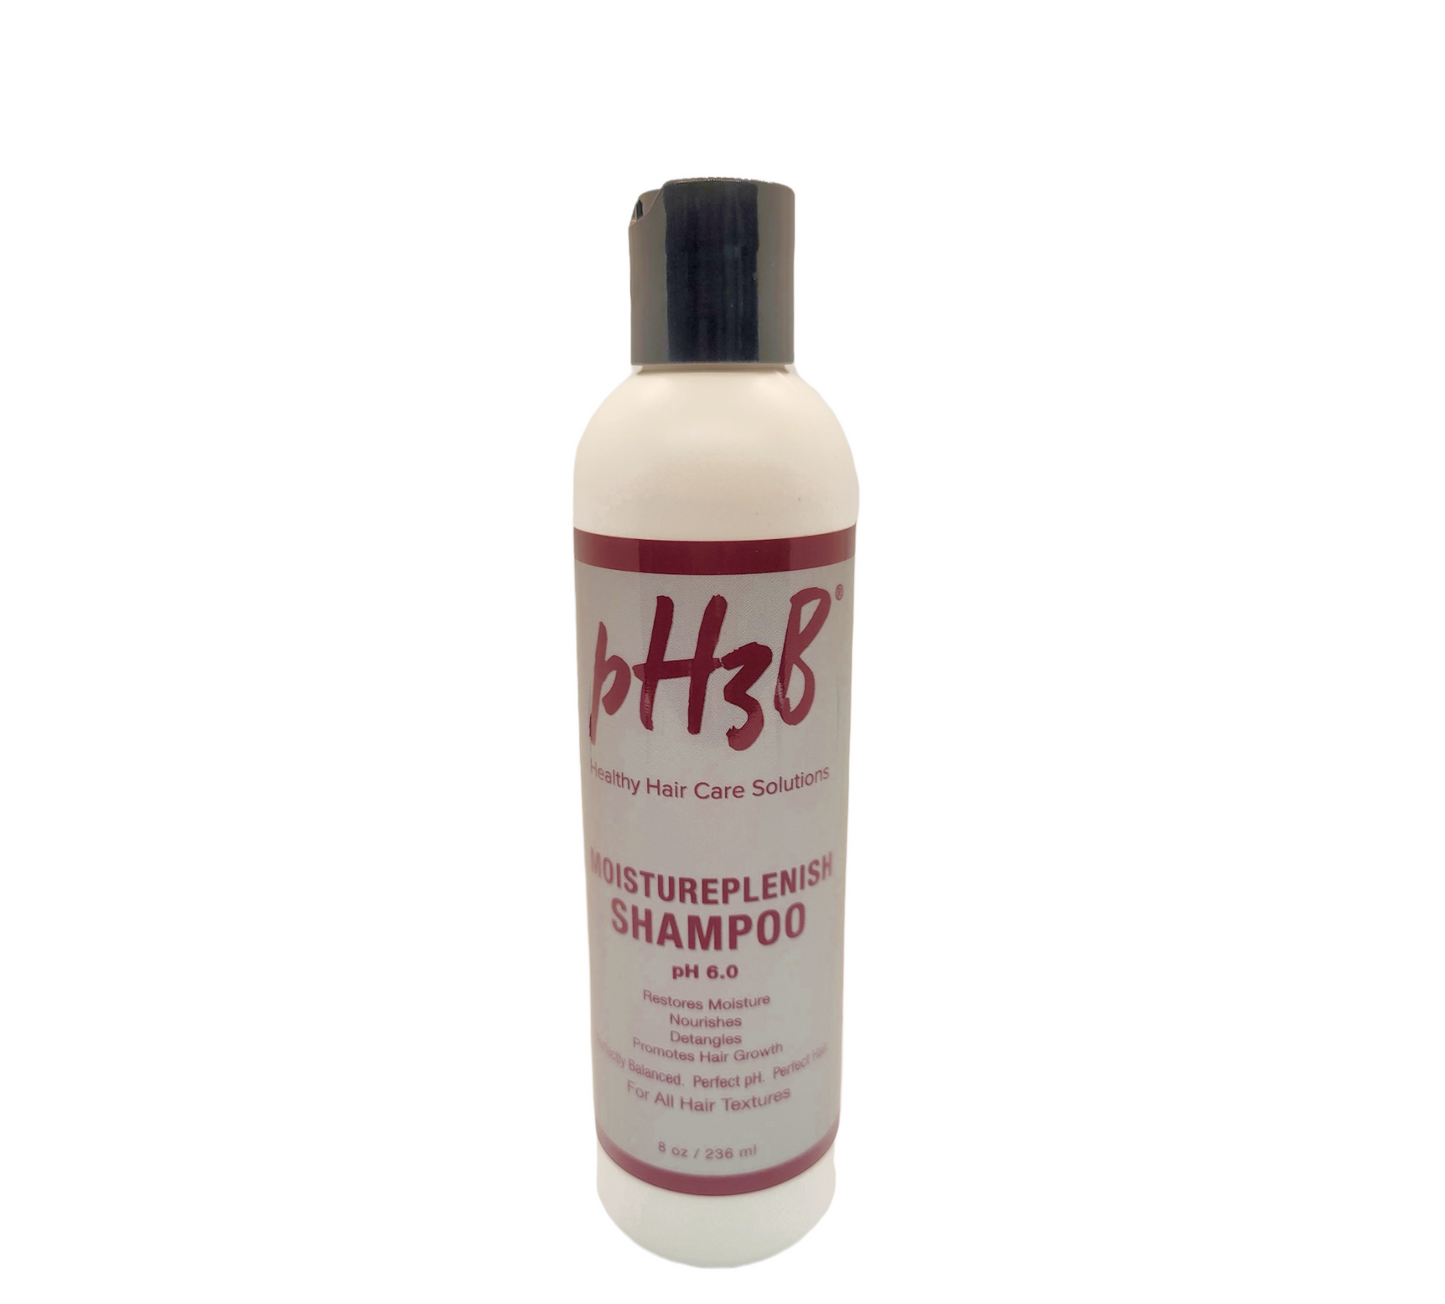 pH3B Moistureplenish Shampoo